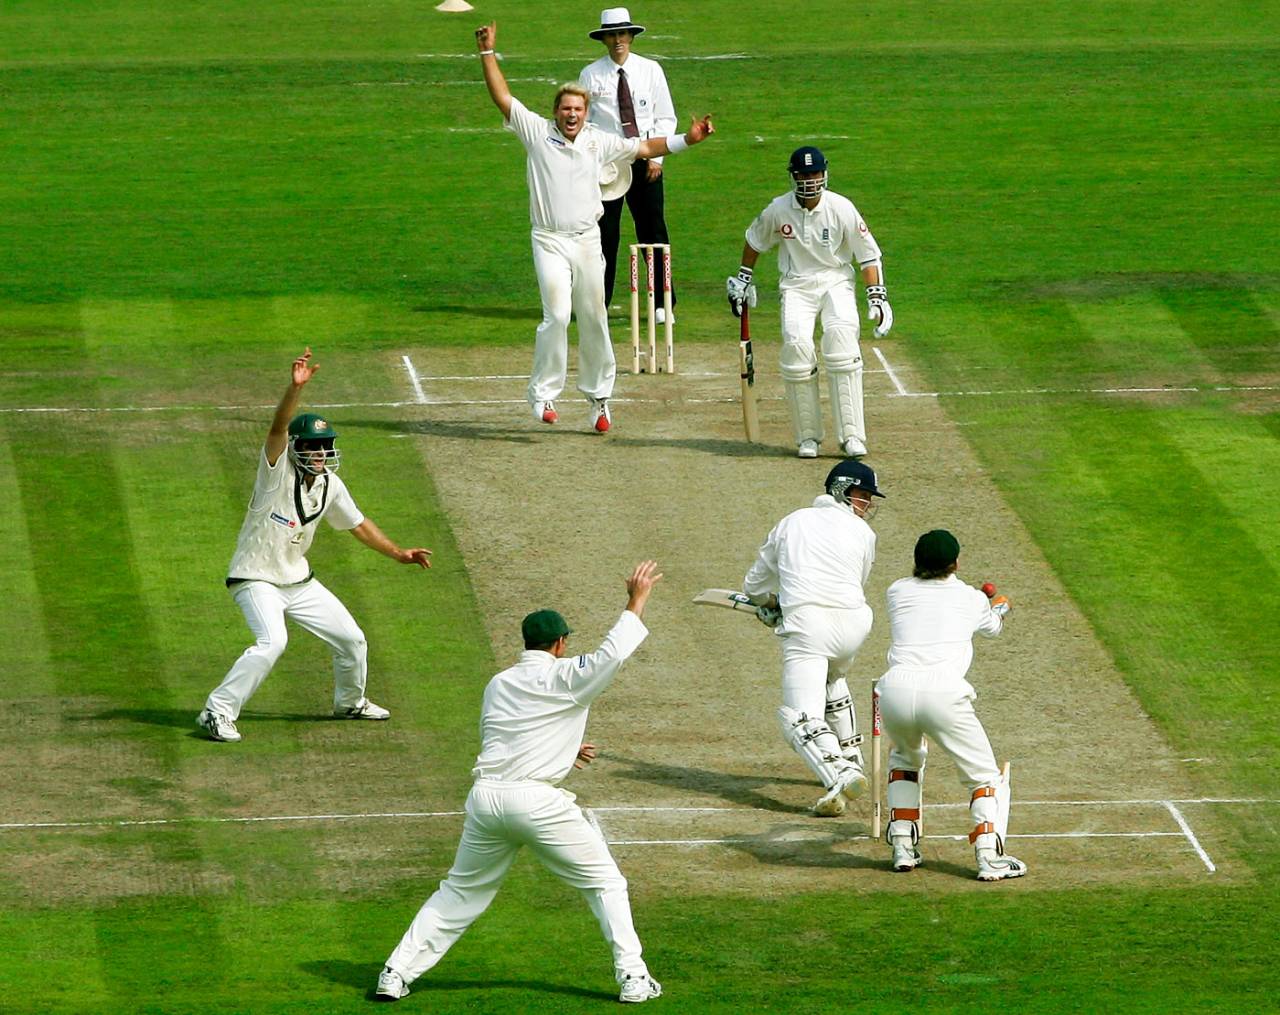 Marcus Trescothick is Shane Warne's 600th Test victim, England v Australia, Old Trafford, August 11, 2005